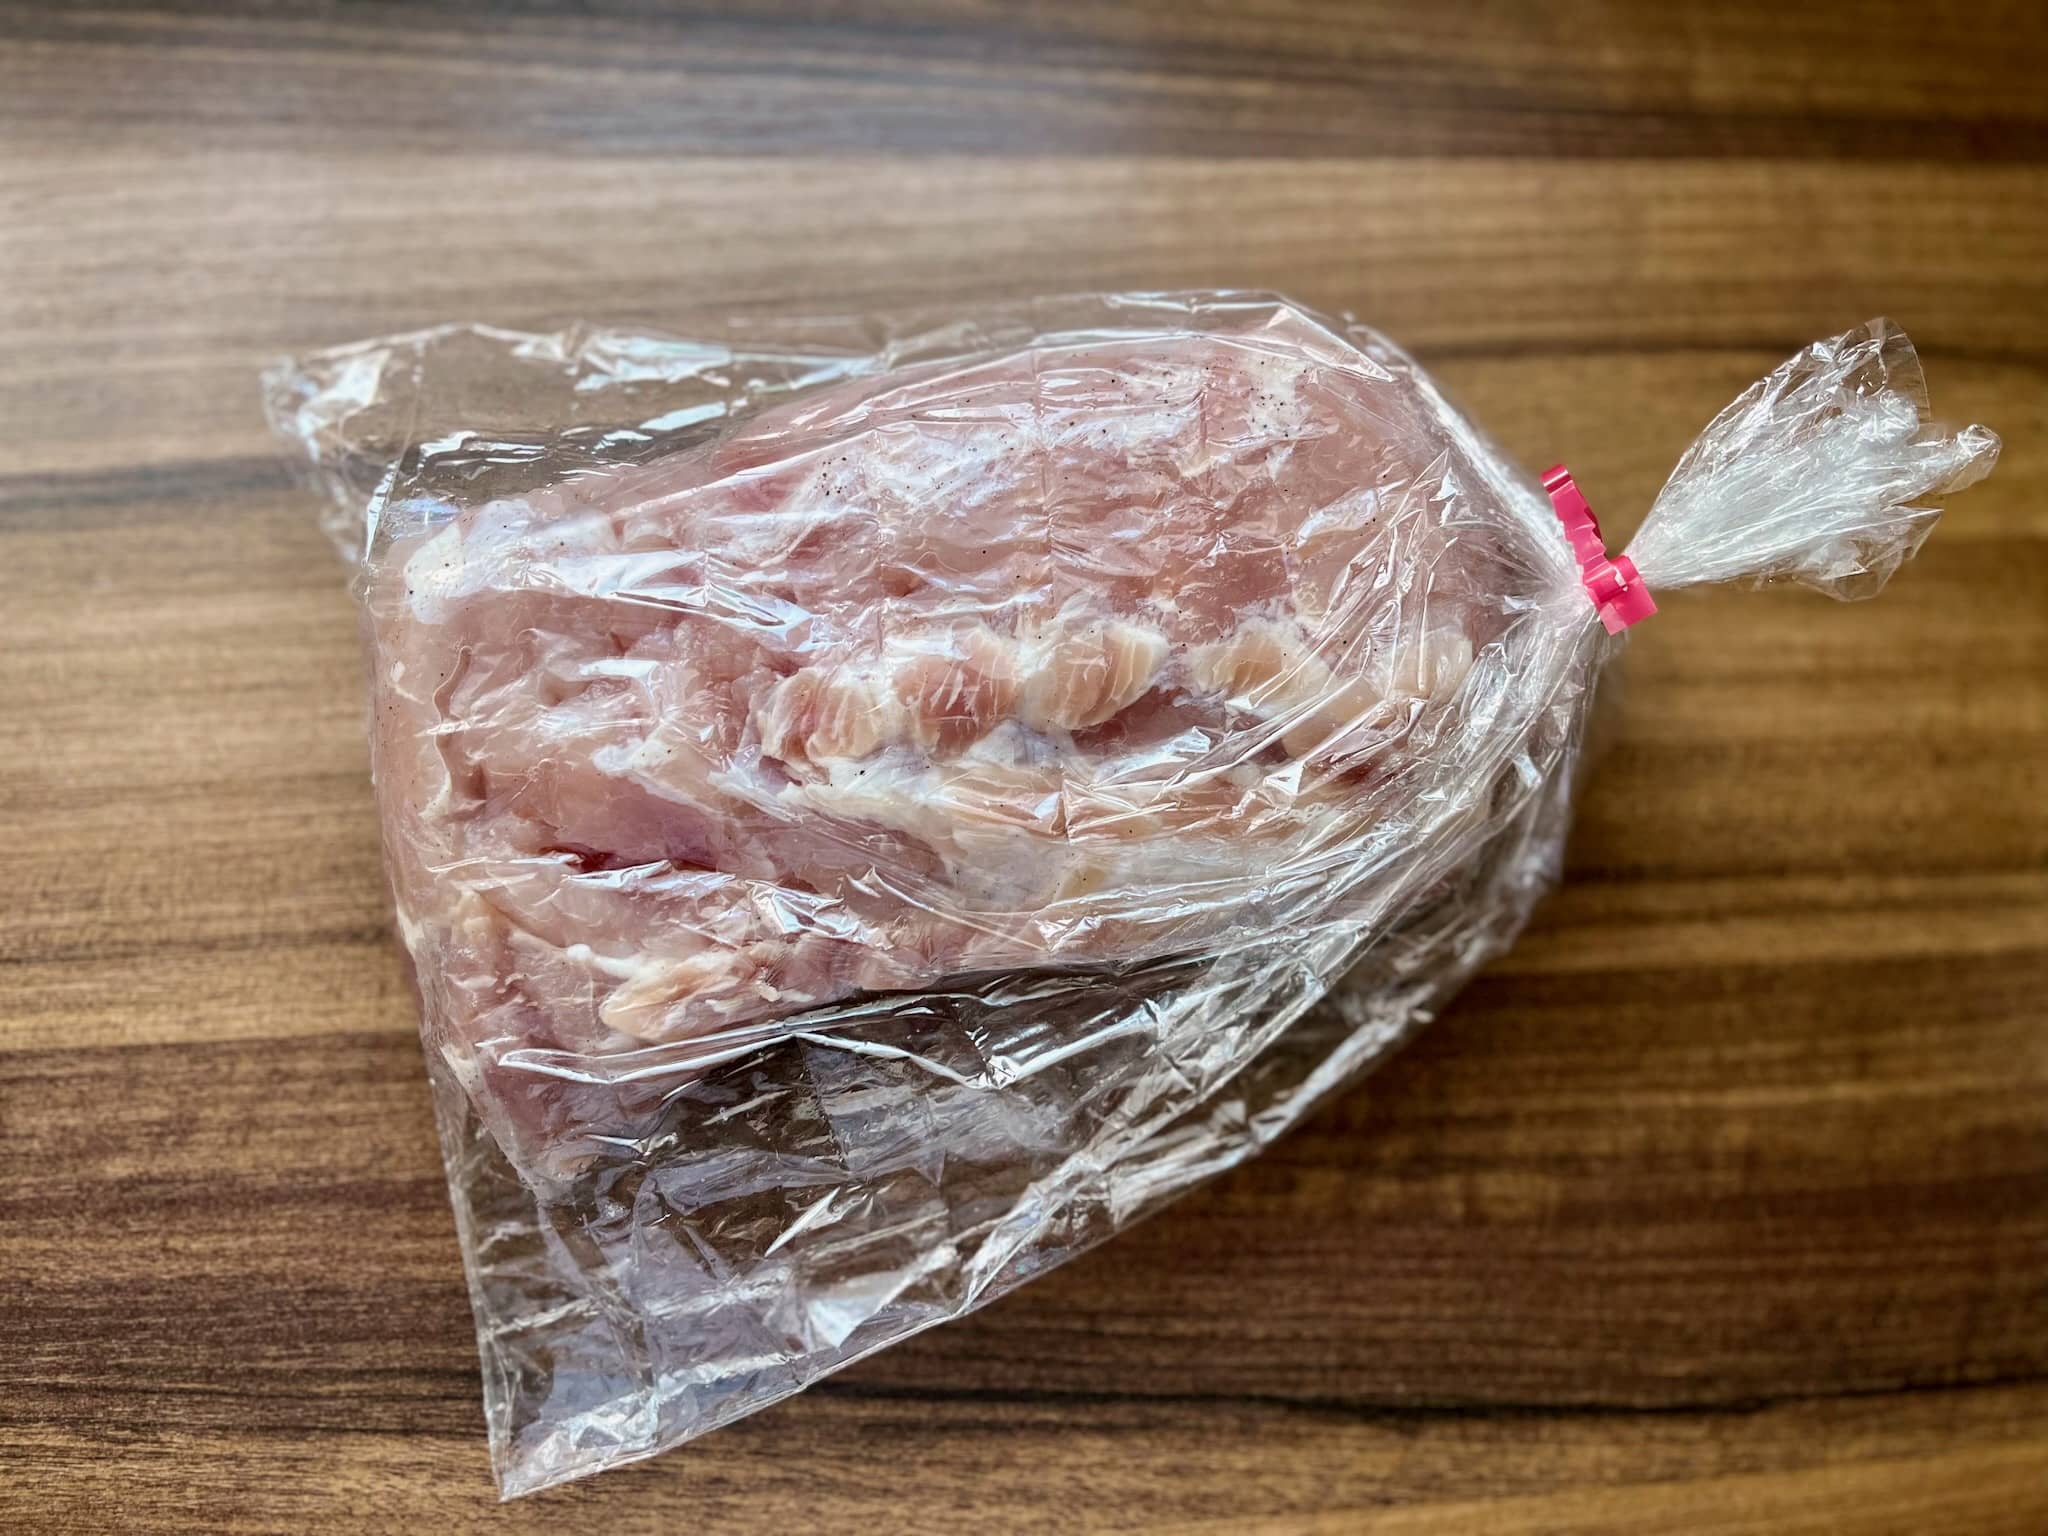 Marinated pork loin in a roasting bag